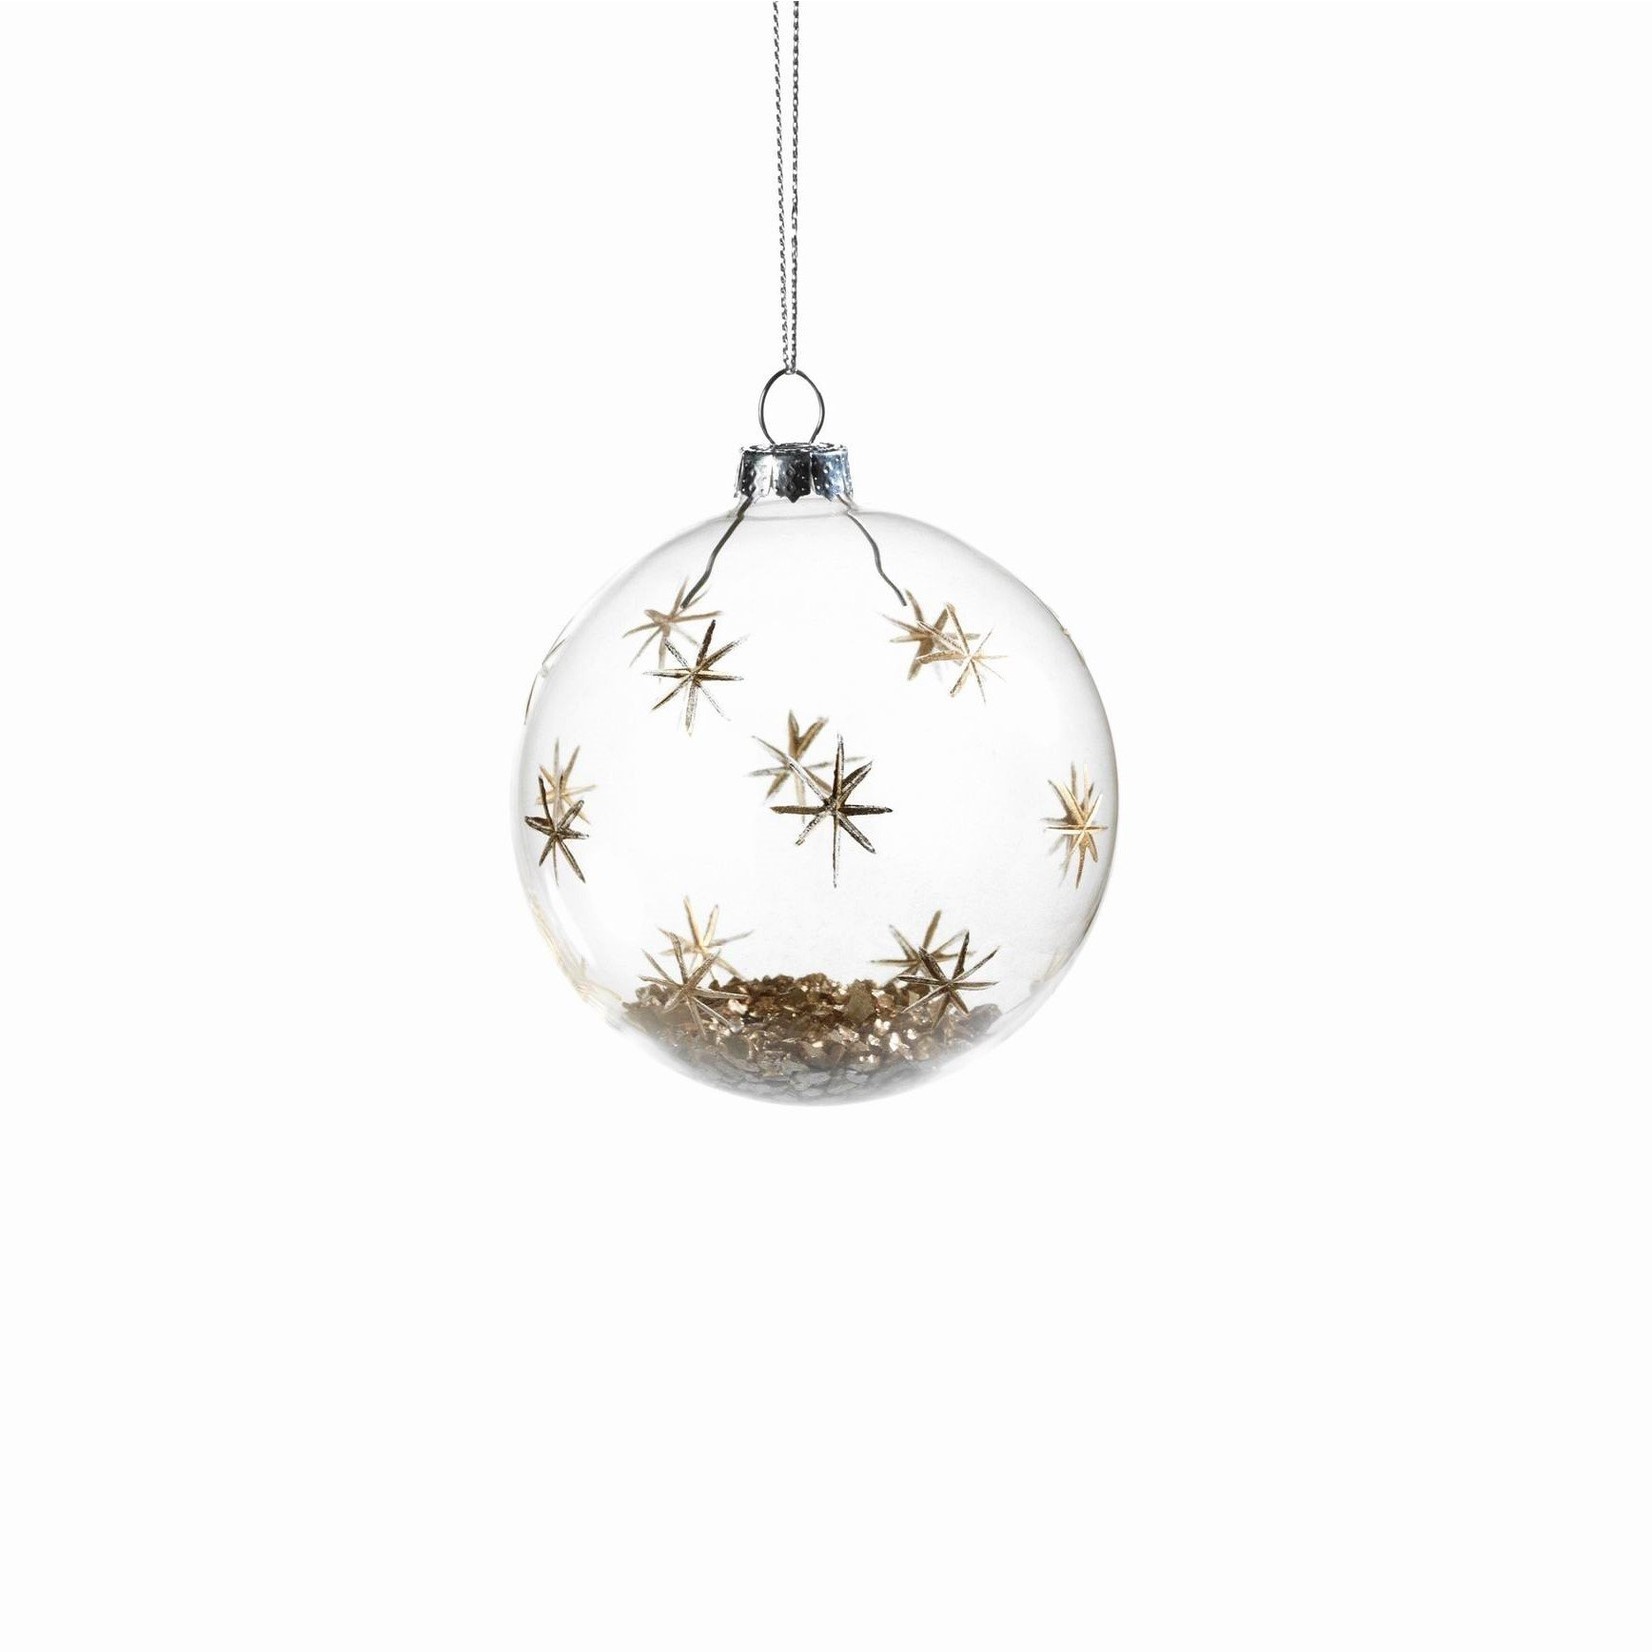 Zodax Clear Ball with Gold Confetti and Decor Ornament Medium